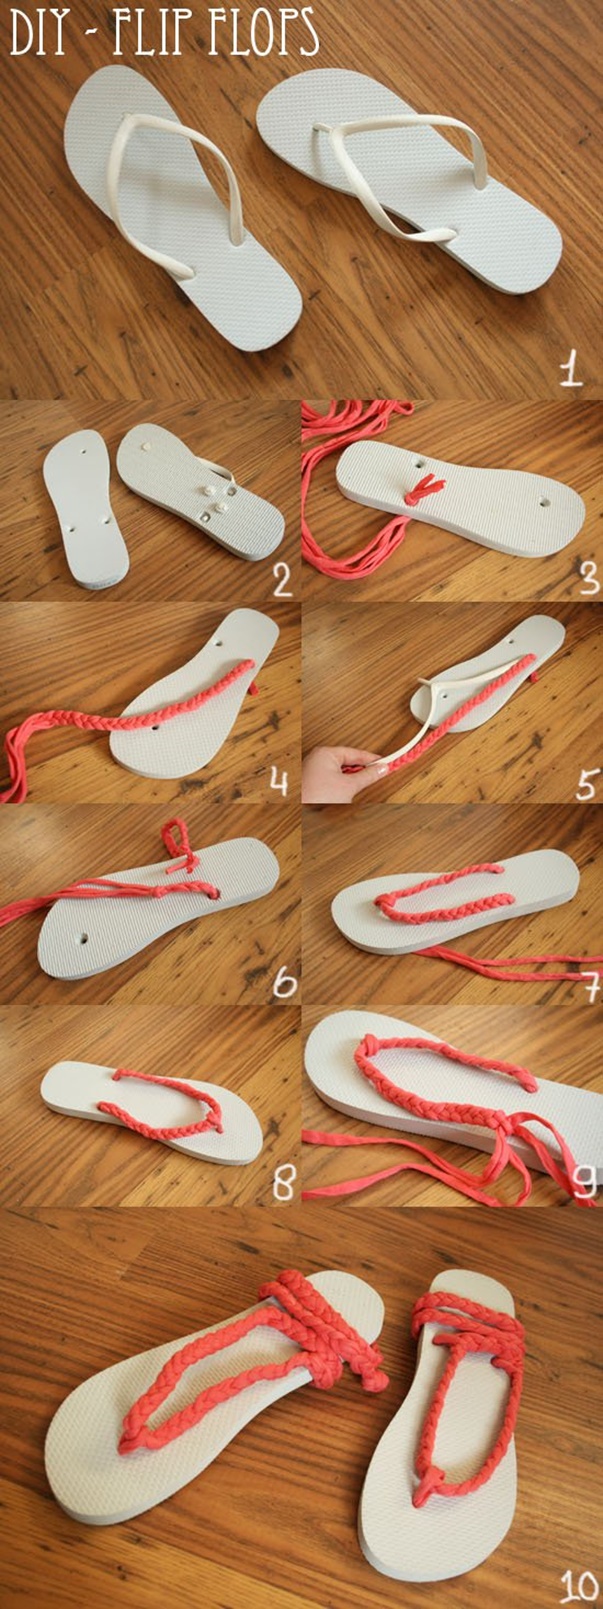 DIY Summer Flip Flop Makeover Ideas Tutorials - DIY Braided Flip Flops